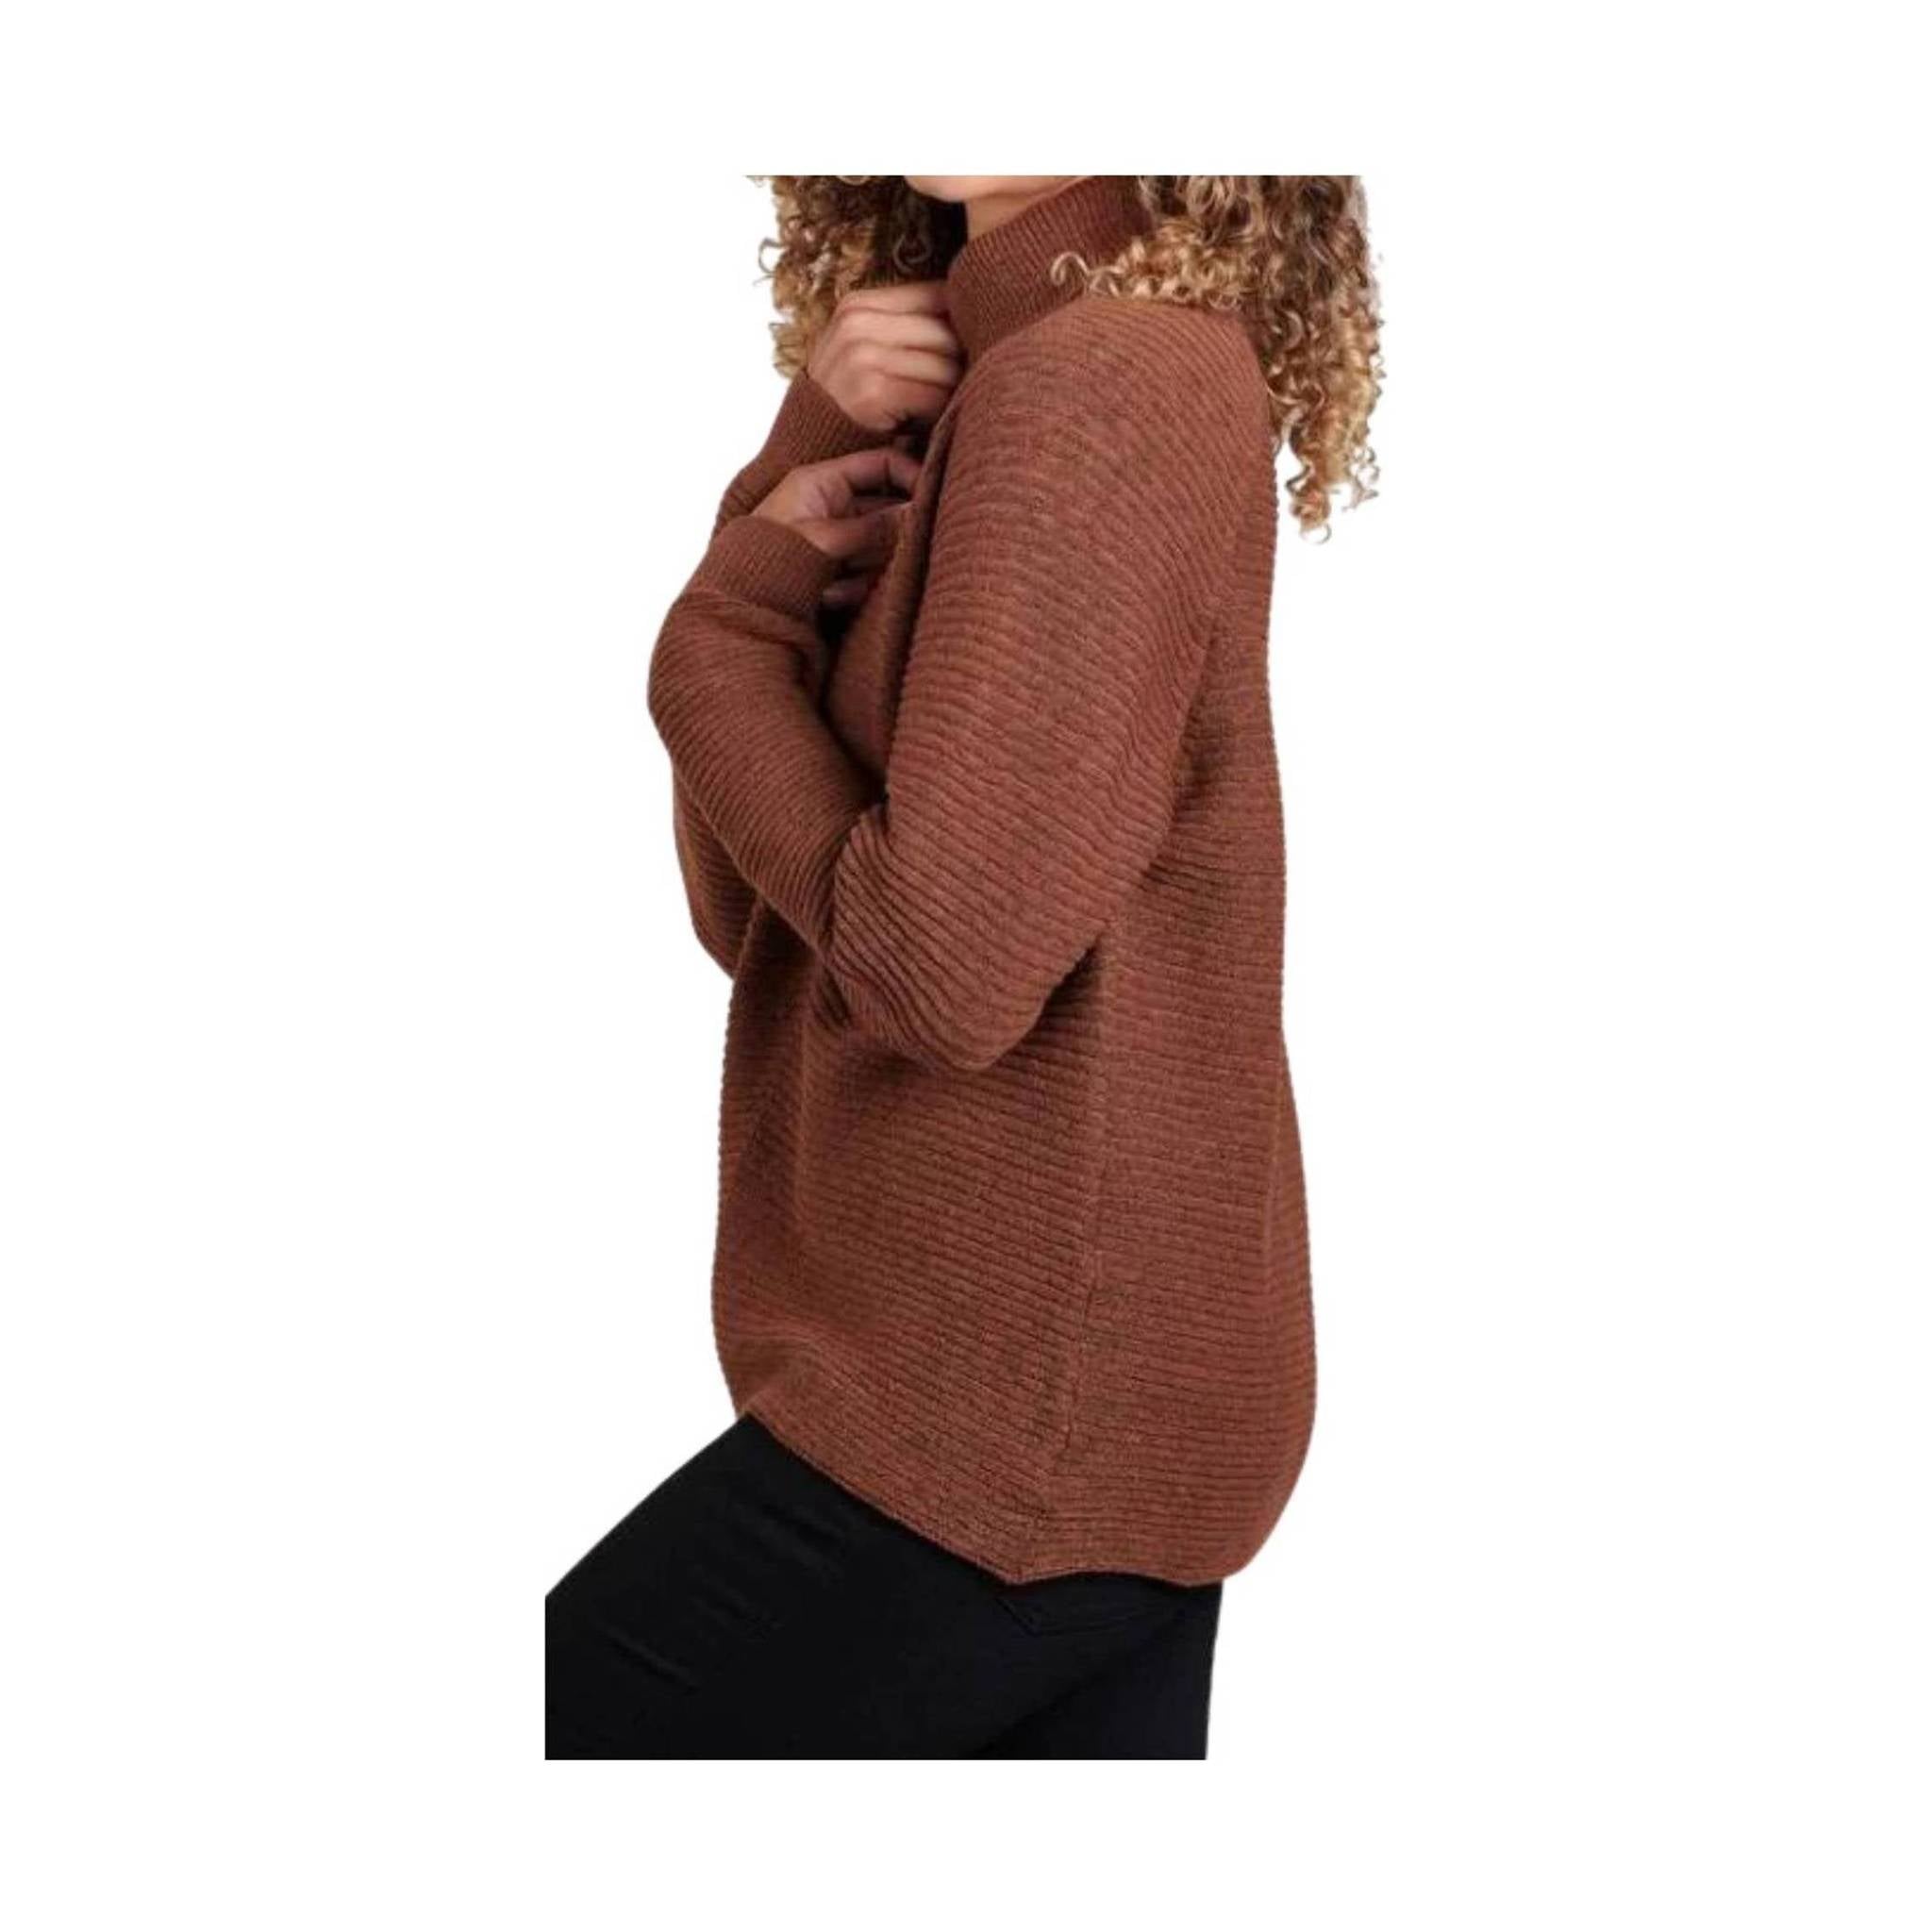 Kuhl Women's Solace Sweater